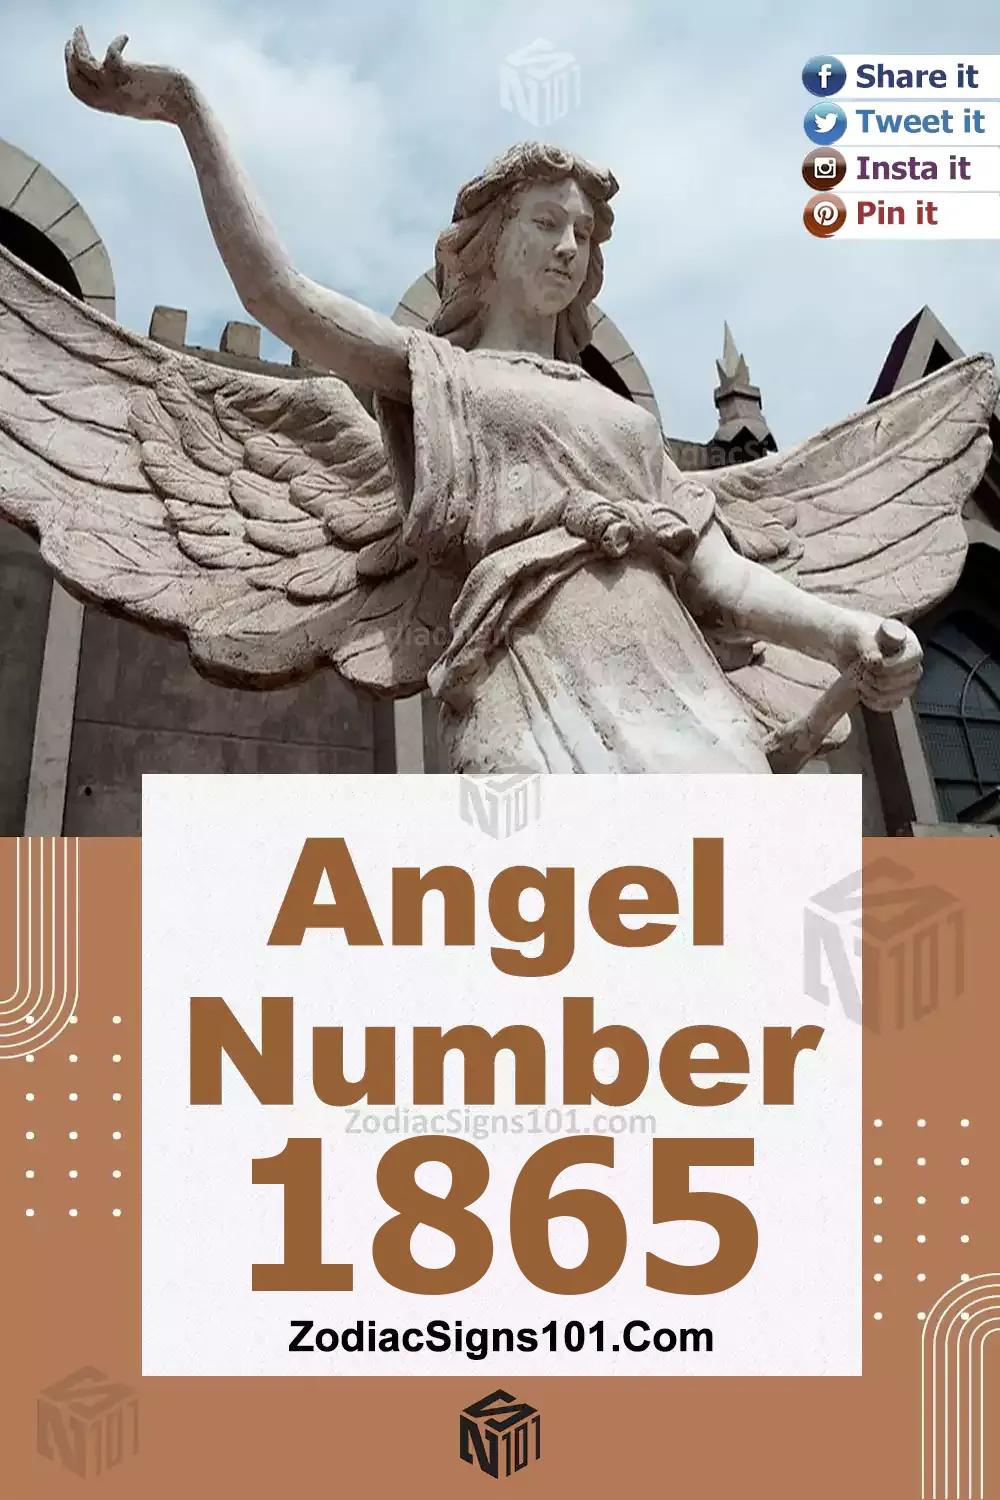 1865-Angel-Number-Meaning.jpg